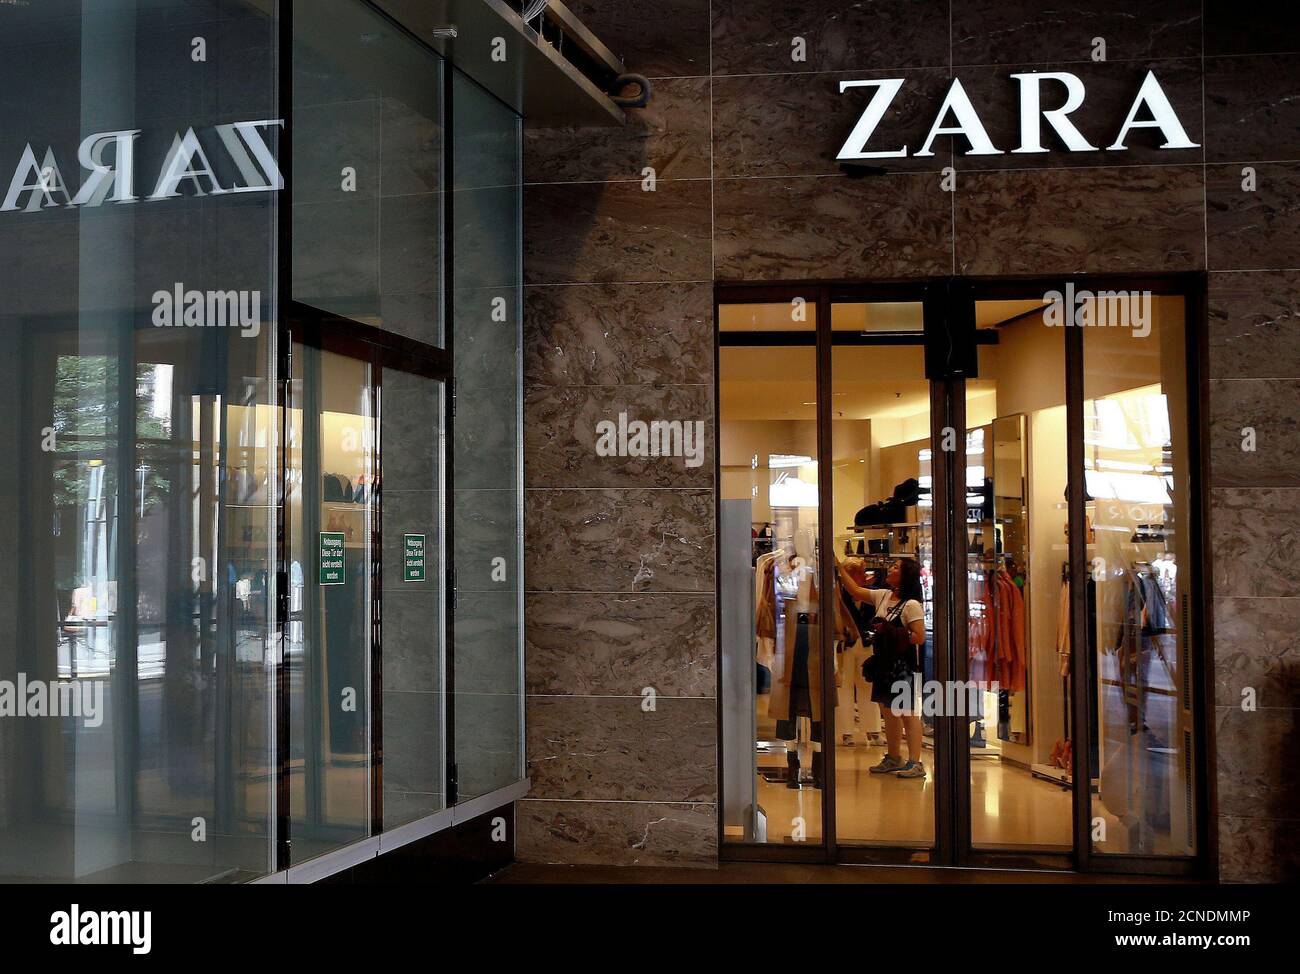 A store of Spanish clothing and accessories retailer Zara is seen in  Zurich, Switzerland August 22, 2016 REUTERS/Arnd Wiegmann Stock Photo -  Alamy